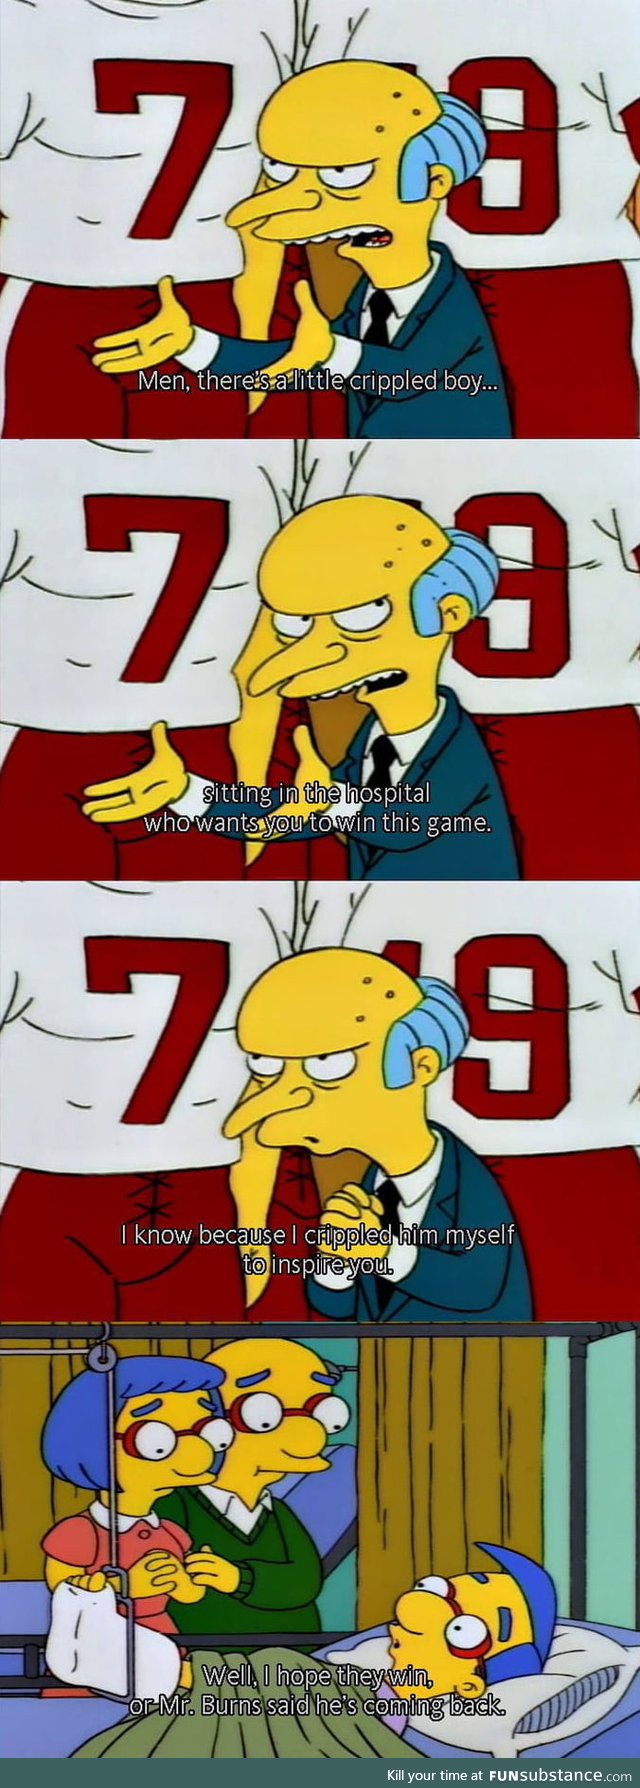 Mr. Burns is a good motivator